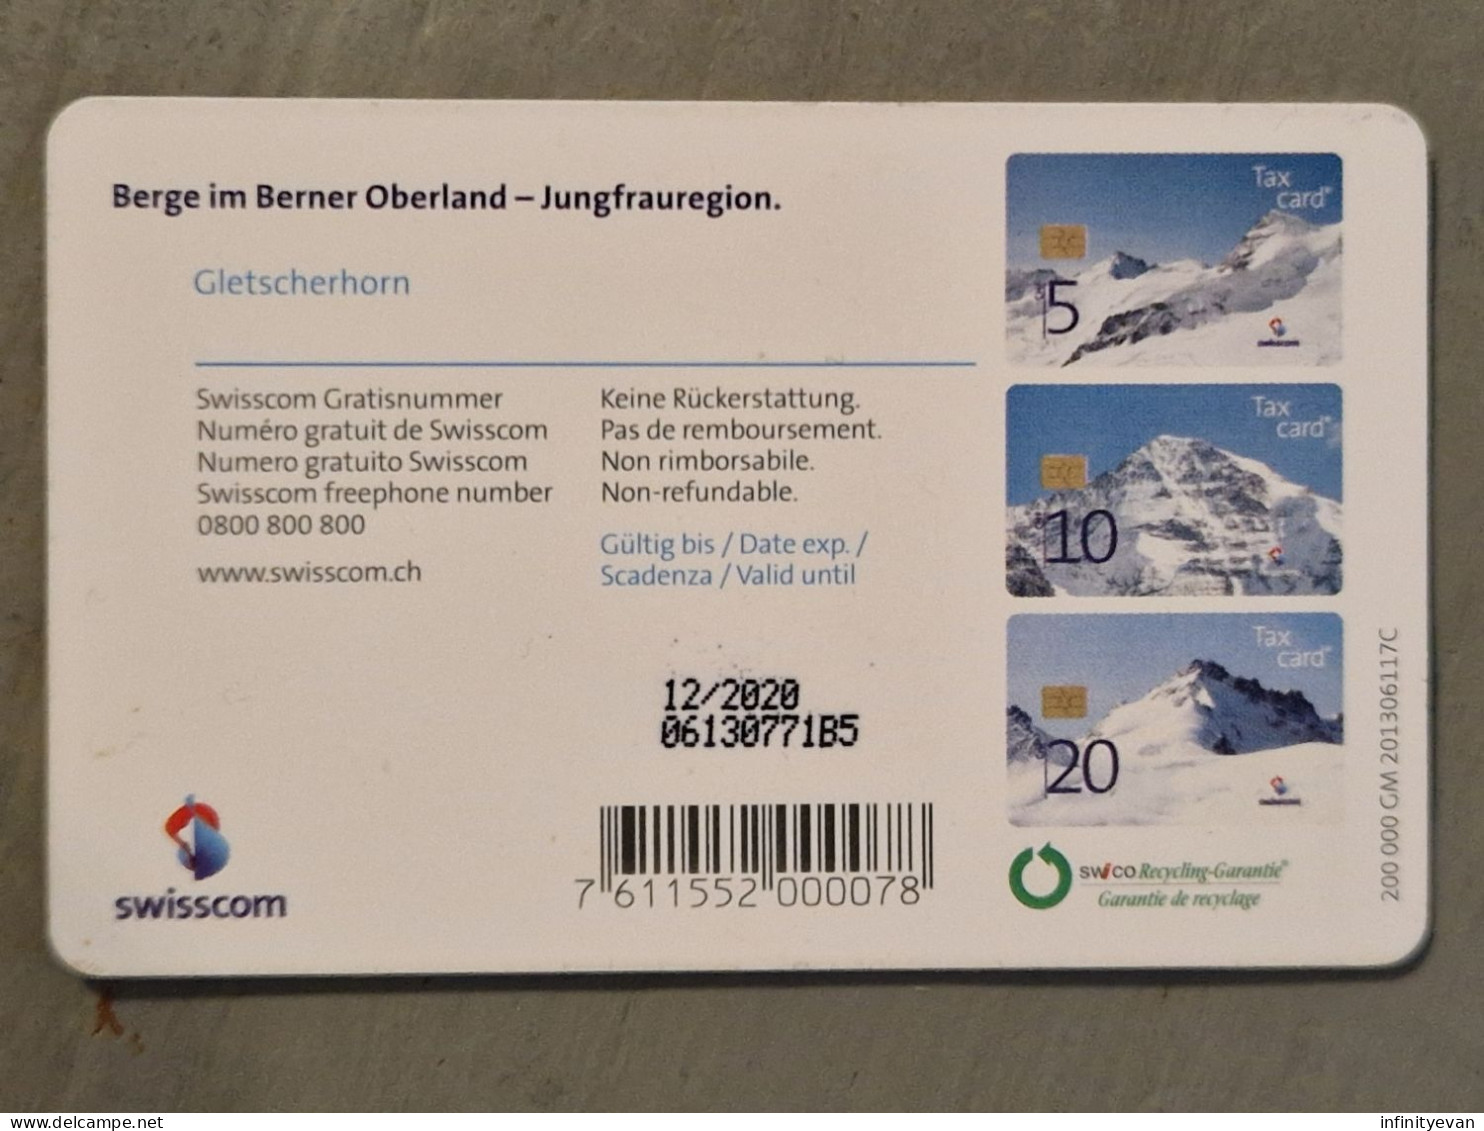 Tax Card 20 CHF MONTAGNE 12/2020 - Schweiz